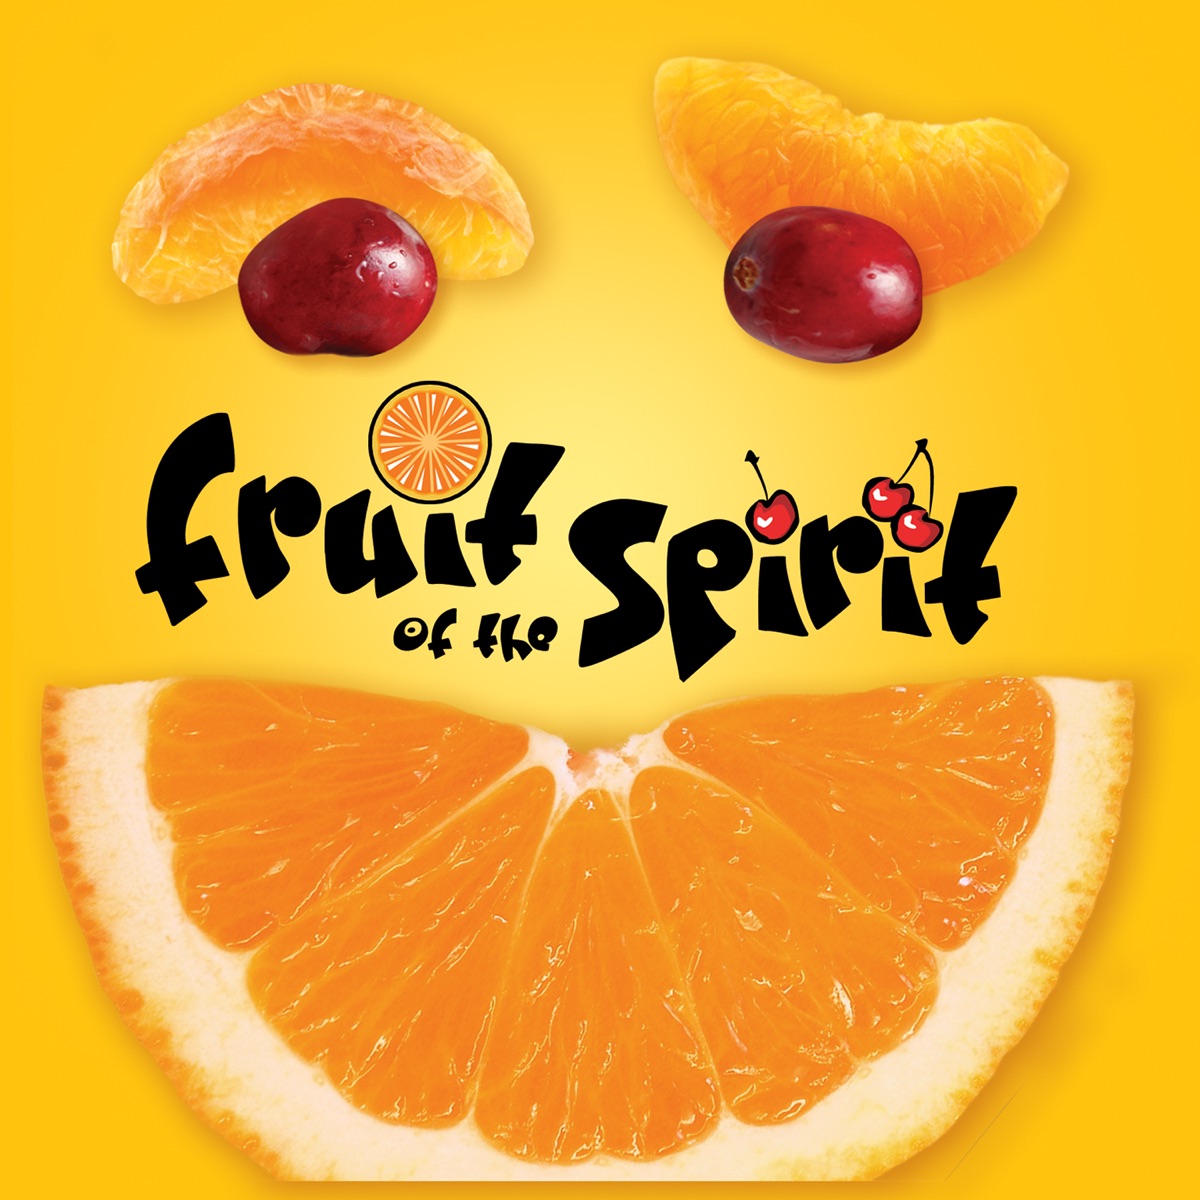 Fruit of the Spirit  Preschool Worship Song 